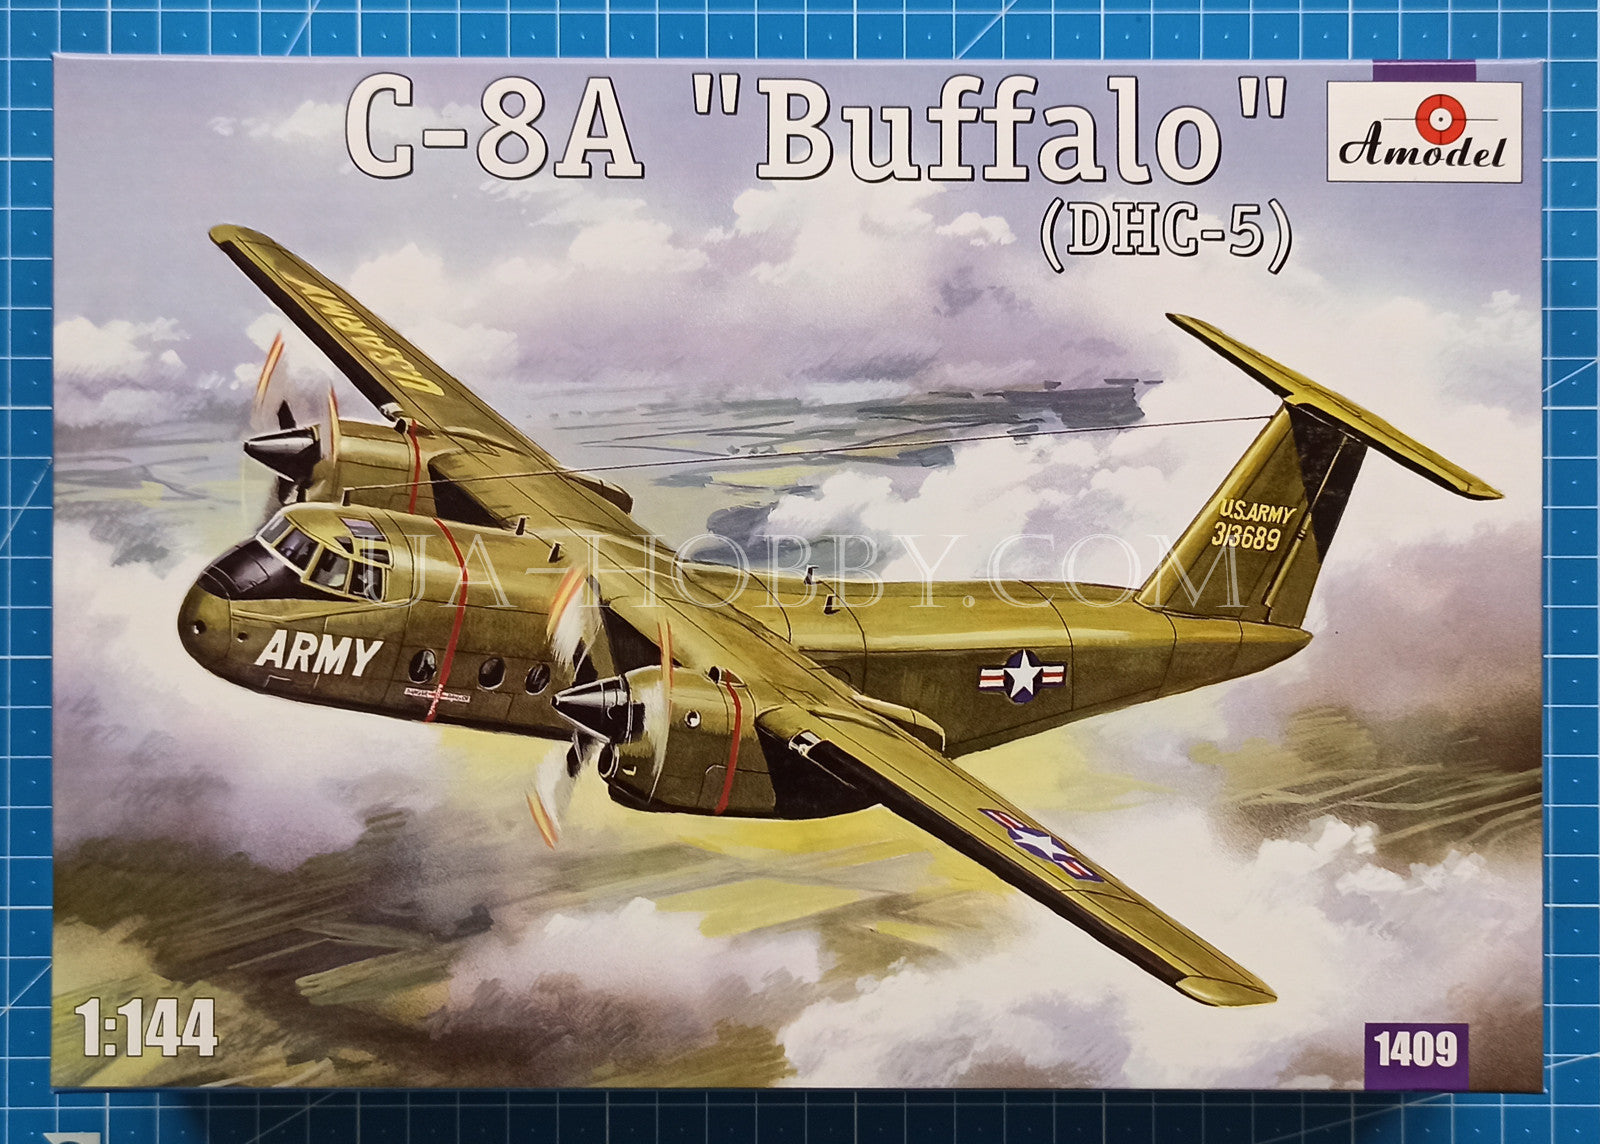 1/144 C-8A "Buffalo" (DHC-5). Amodel 1409